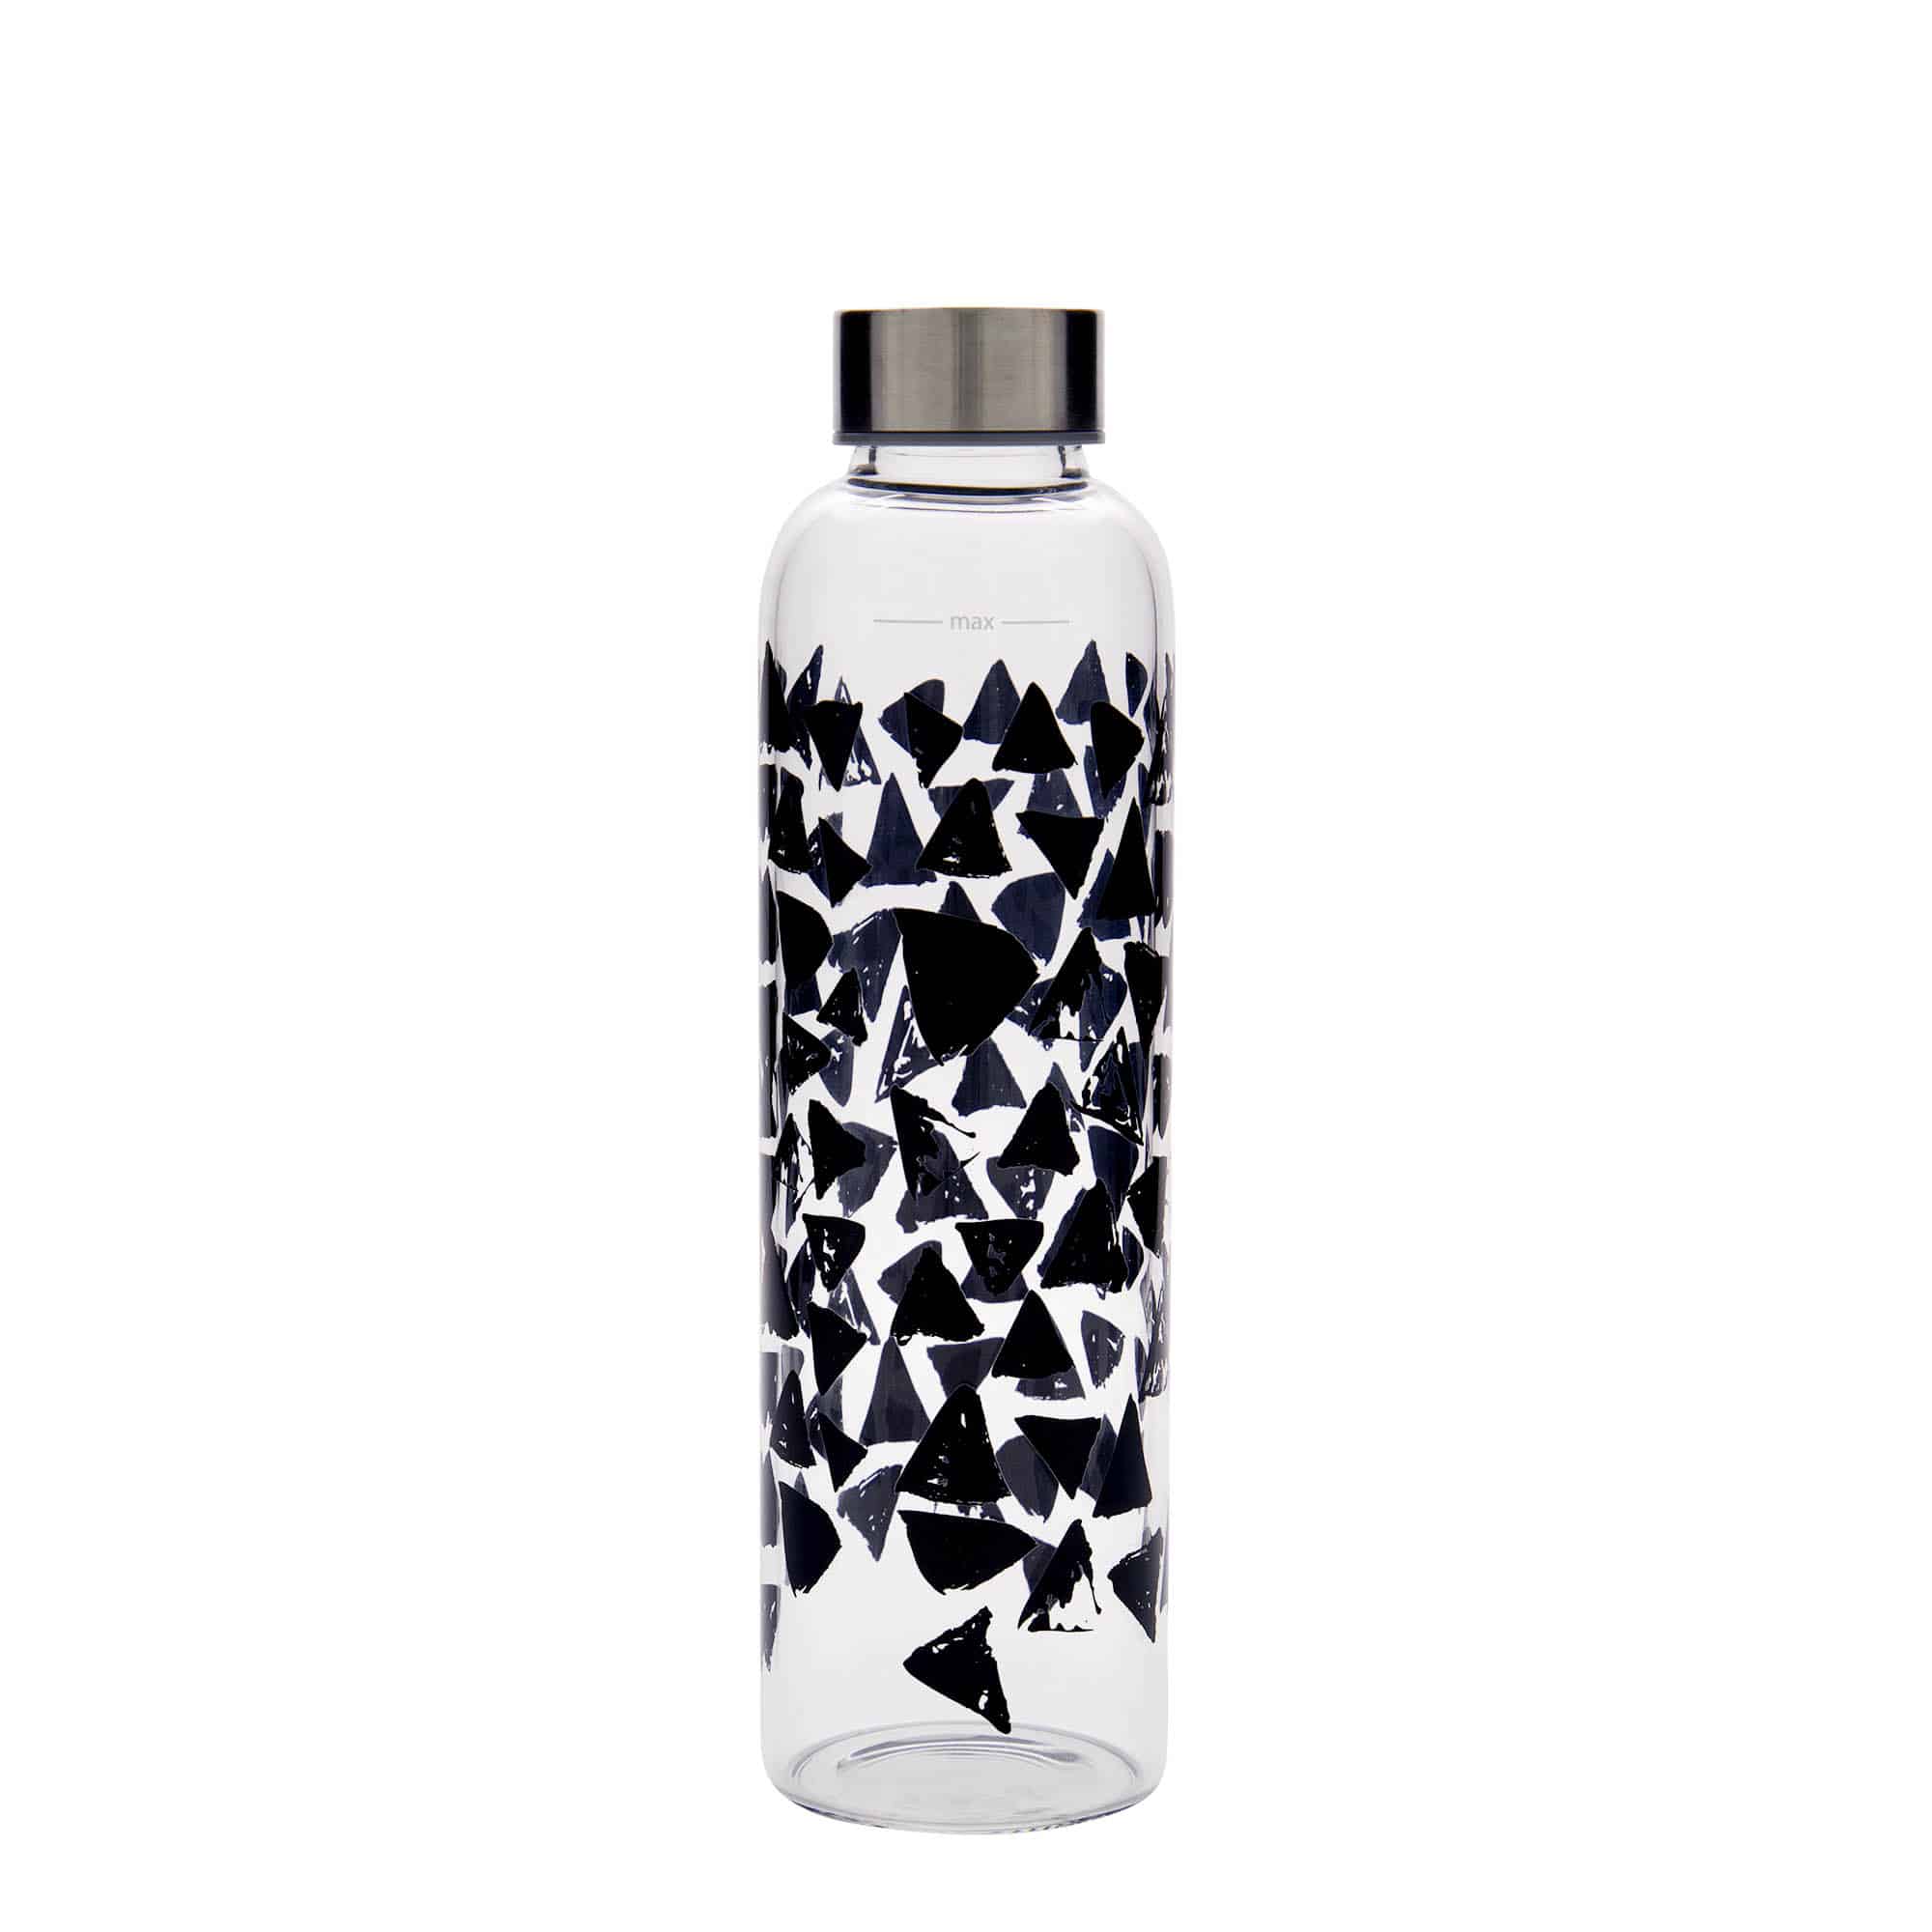 500 ml water bottle 'Perseus', print: black triangles, closure: screw cap